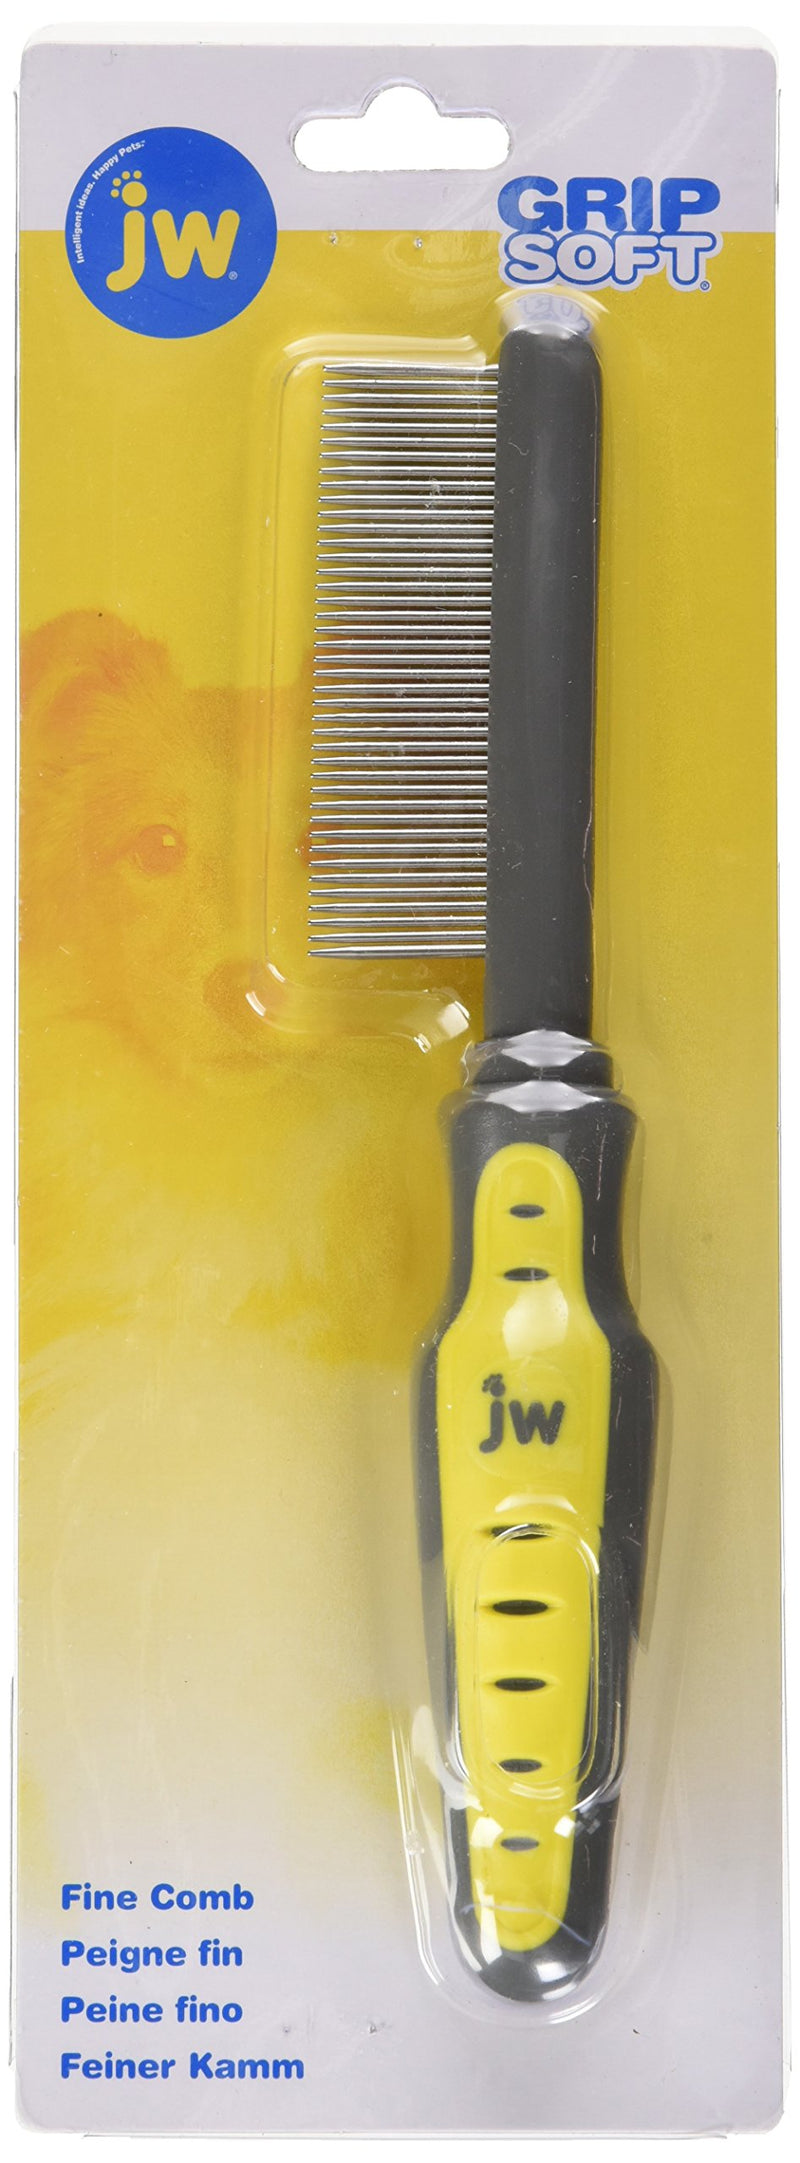 [Australia] - JW Pet Company GripSoft Fine Comb for Dogs 